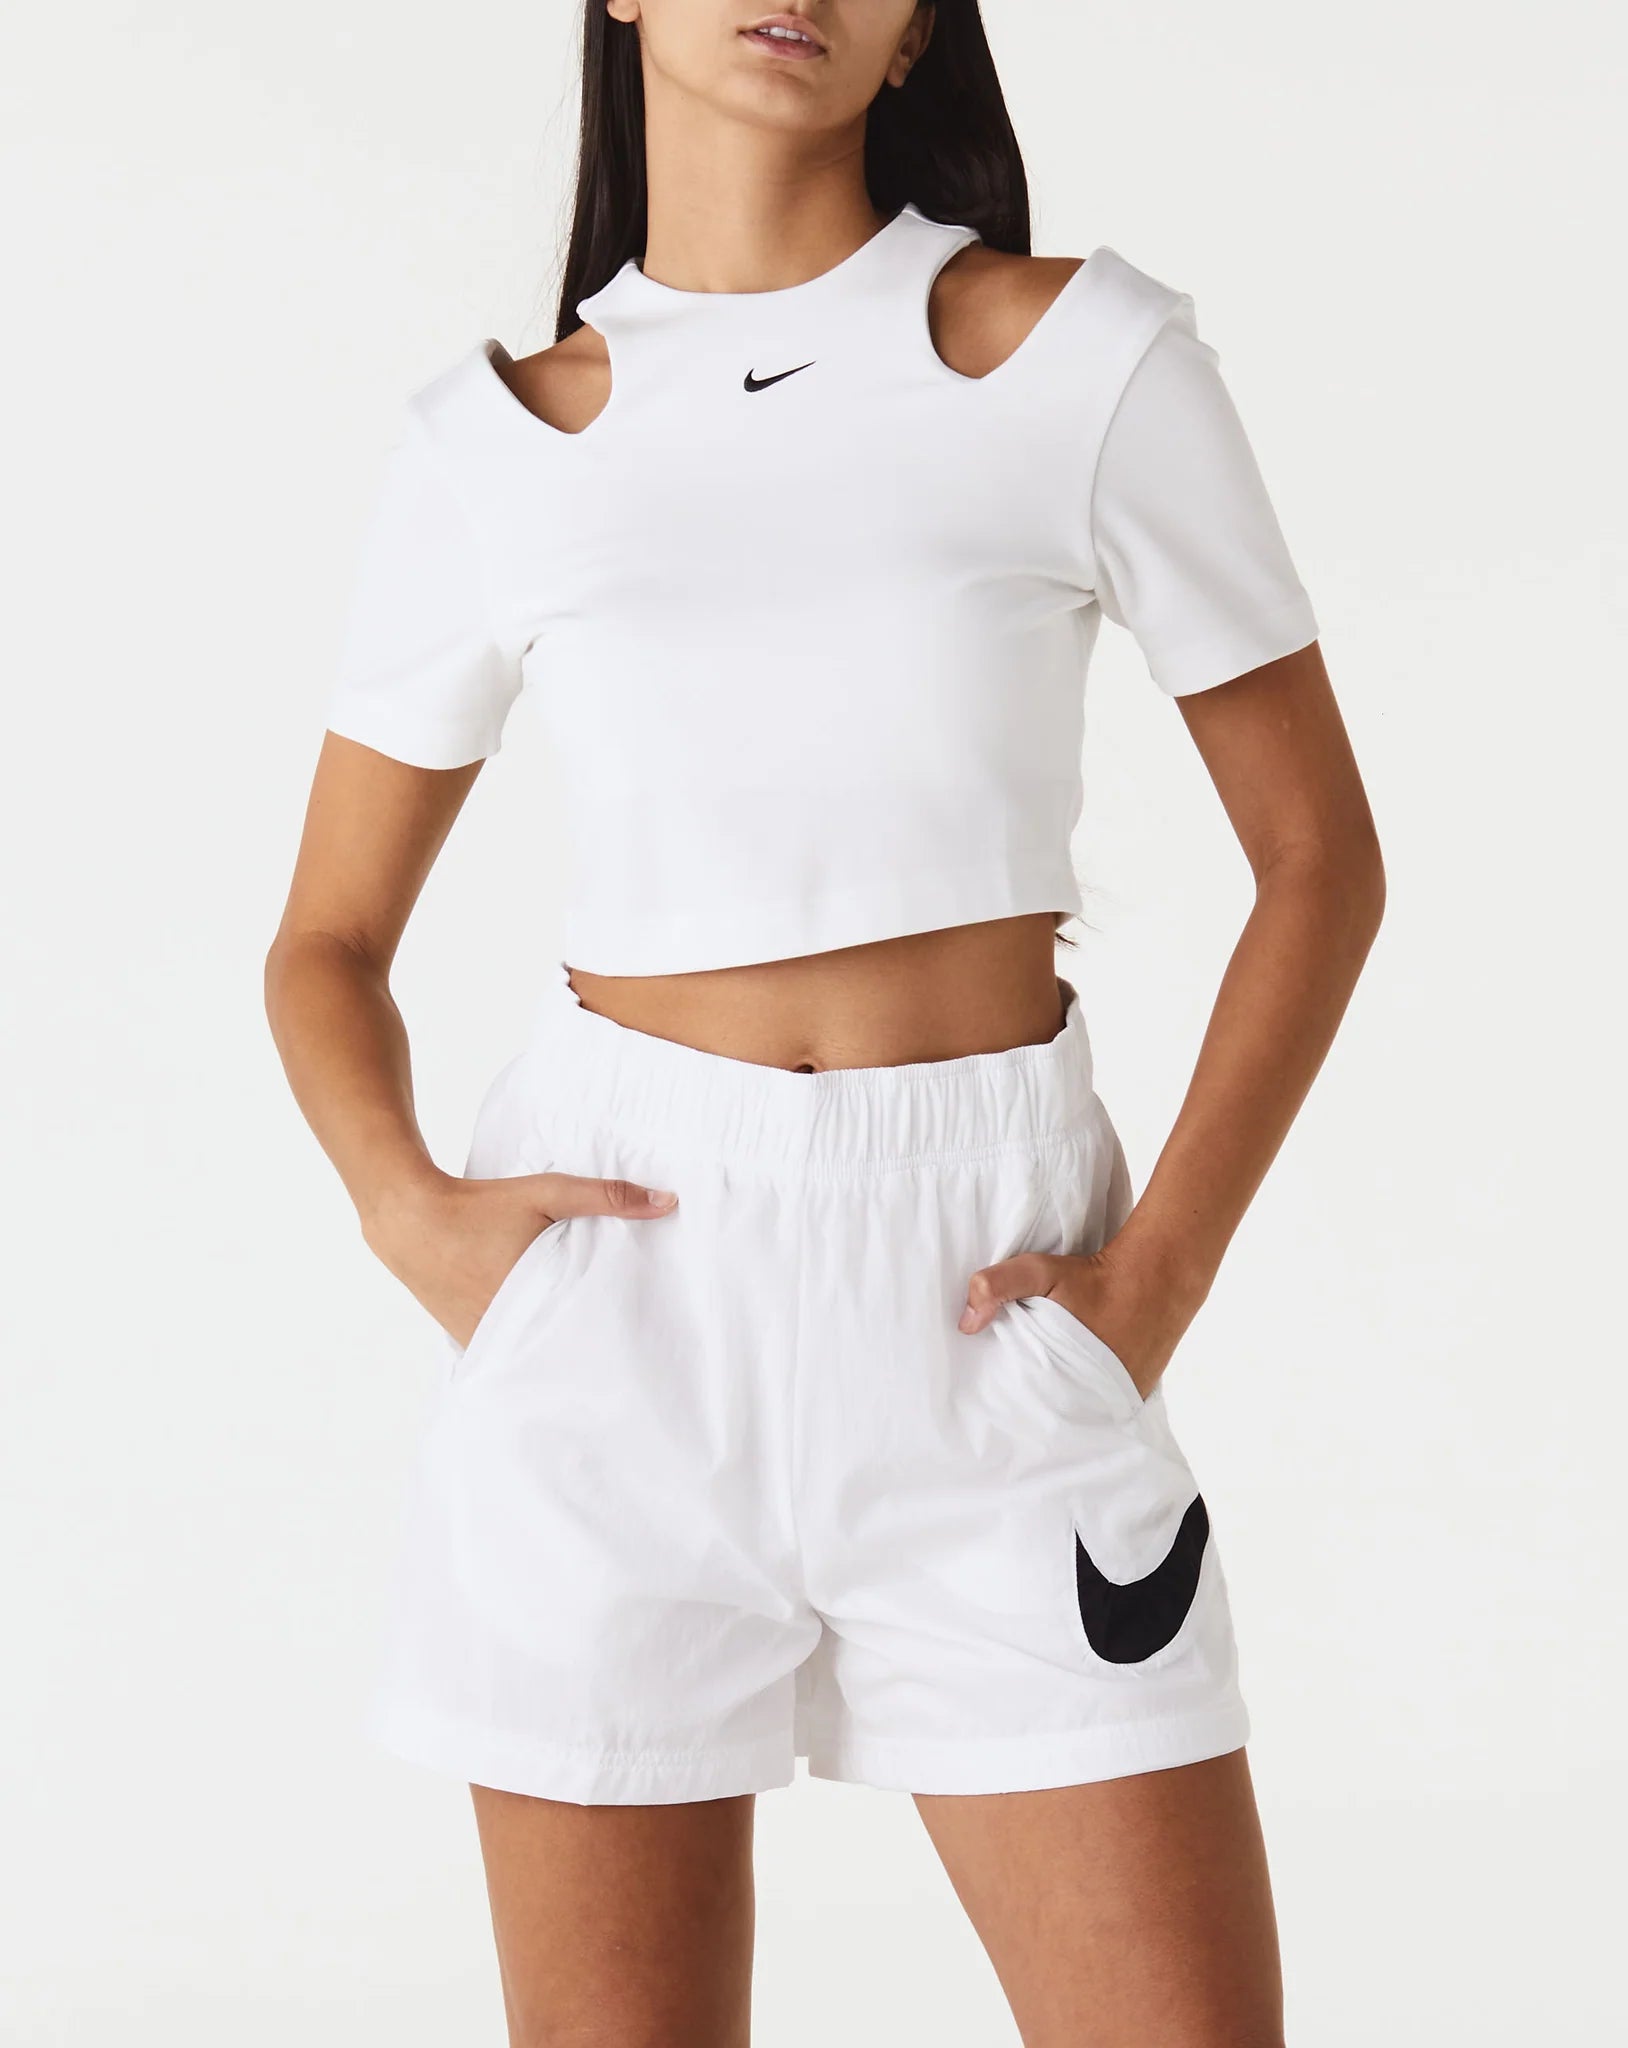 Prooi geur Sta op Nike - Women - Essential Cutout Crop Top - White/Black - Nohble